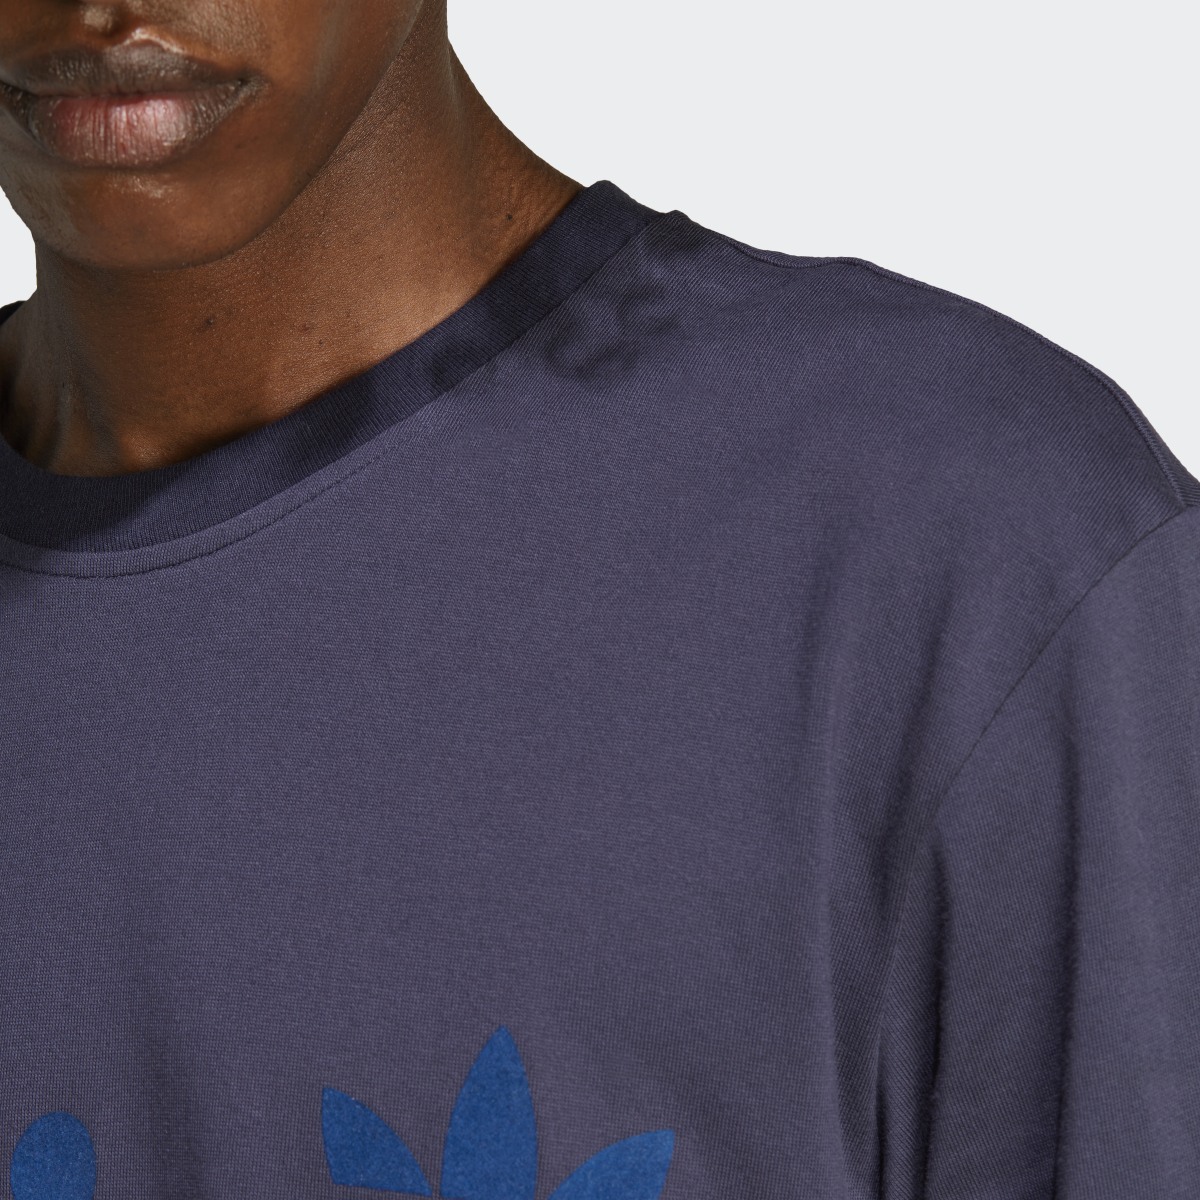 Adidas RIFTA City Boy Graphic T-Shirt. 8